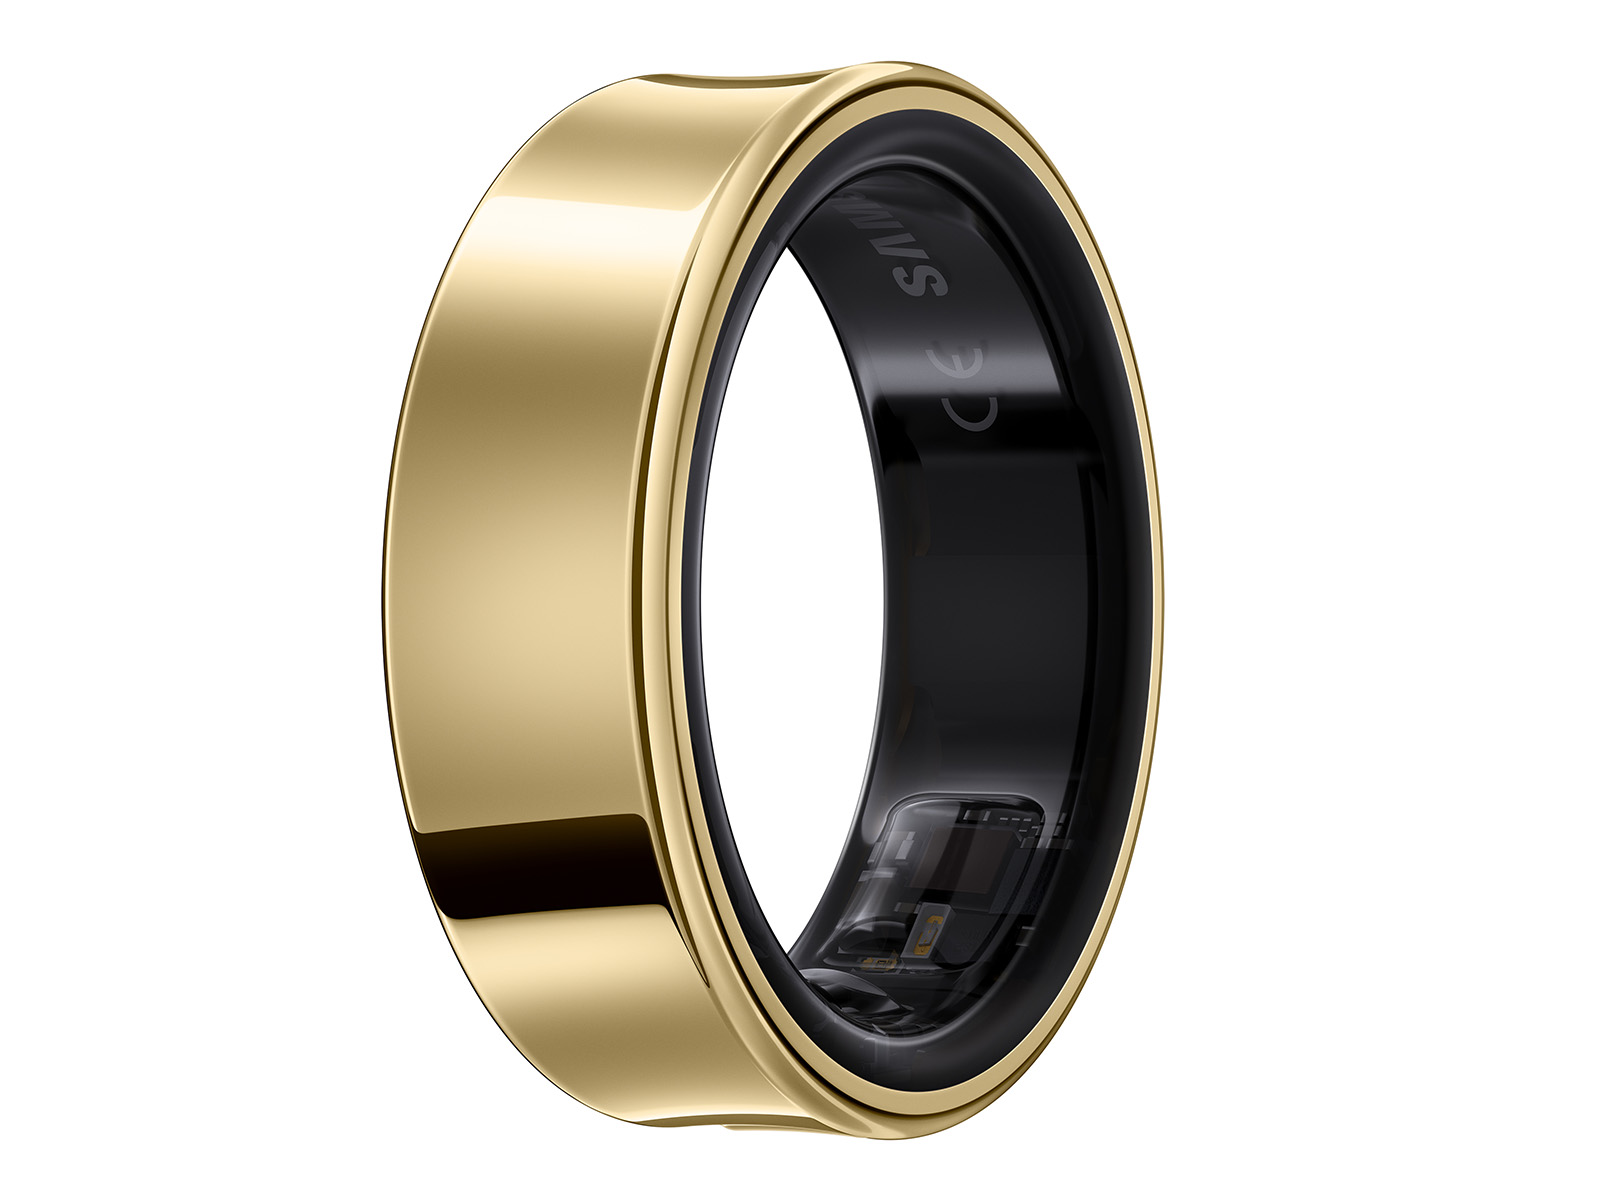 Thumbnail image of Galaxy Ring, Size 11, Titanium Gold